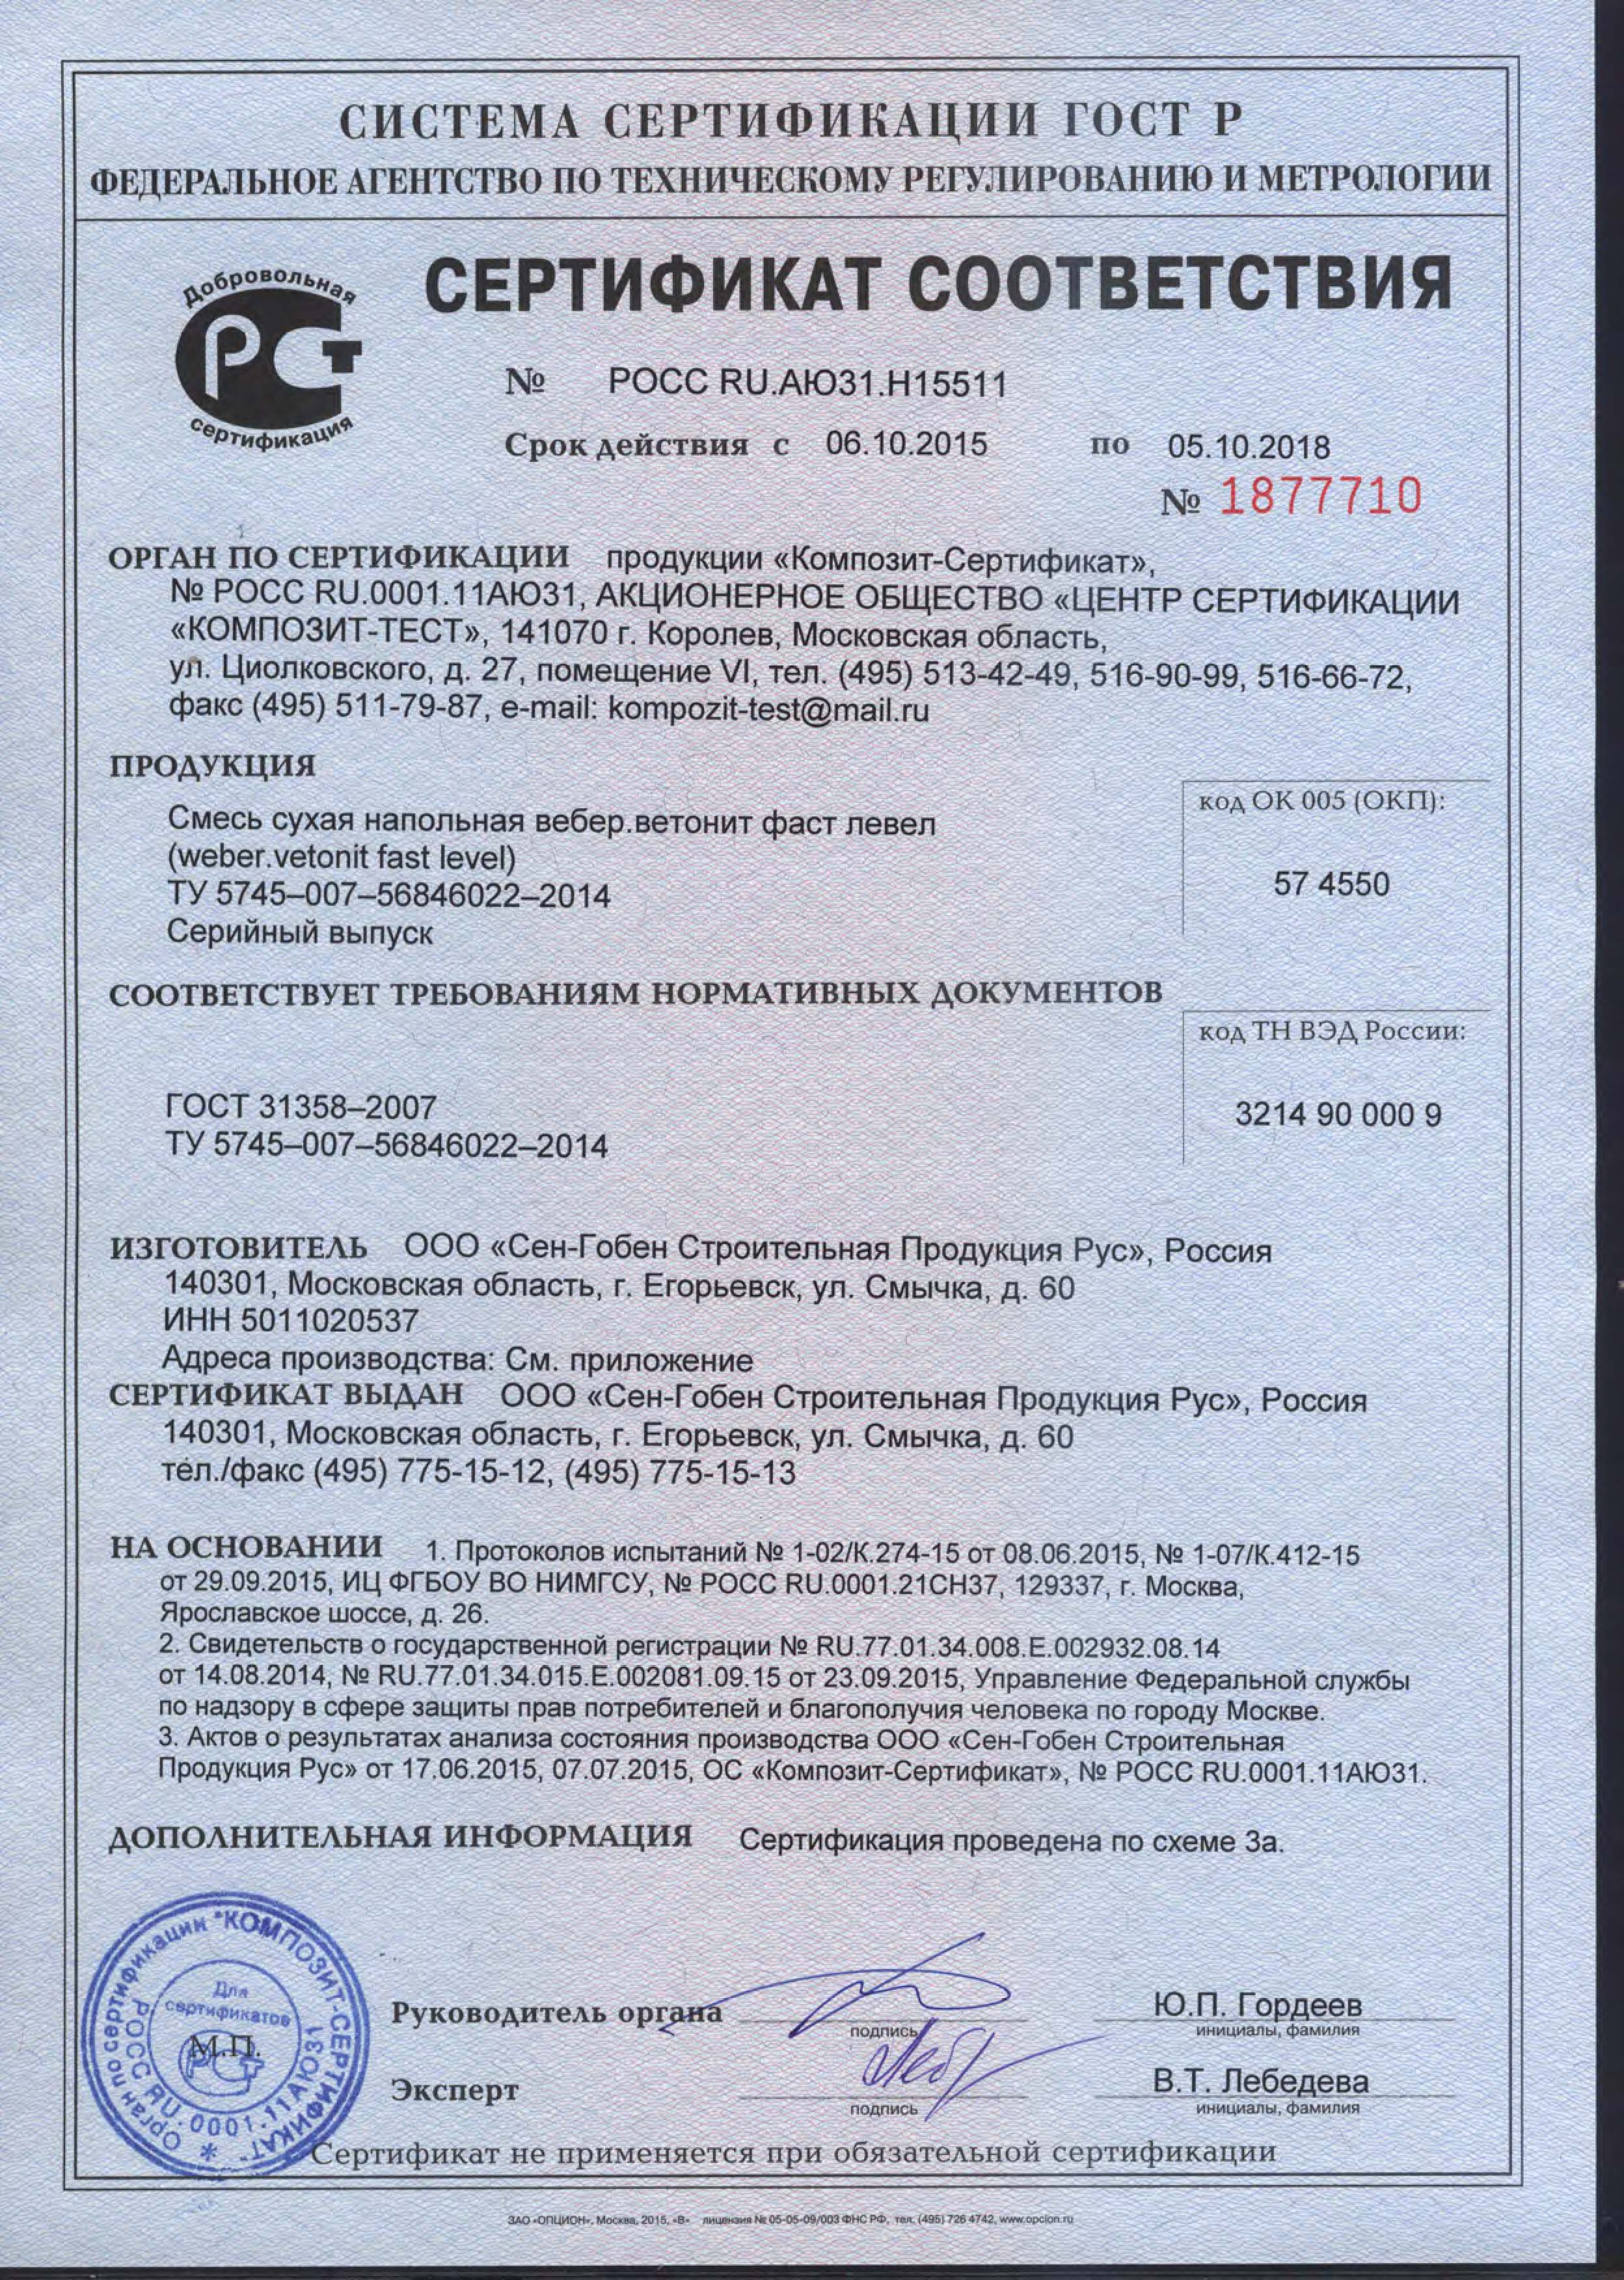 Сертификат соответствия на наливной пол ветонит Фаст Левел 1-я страница